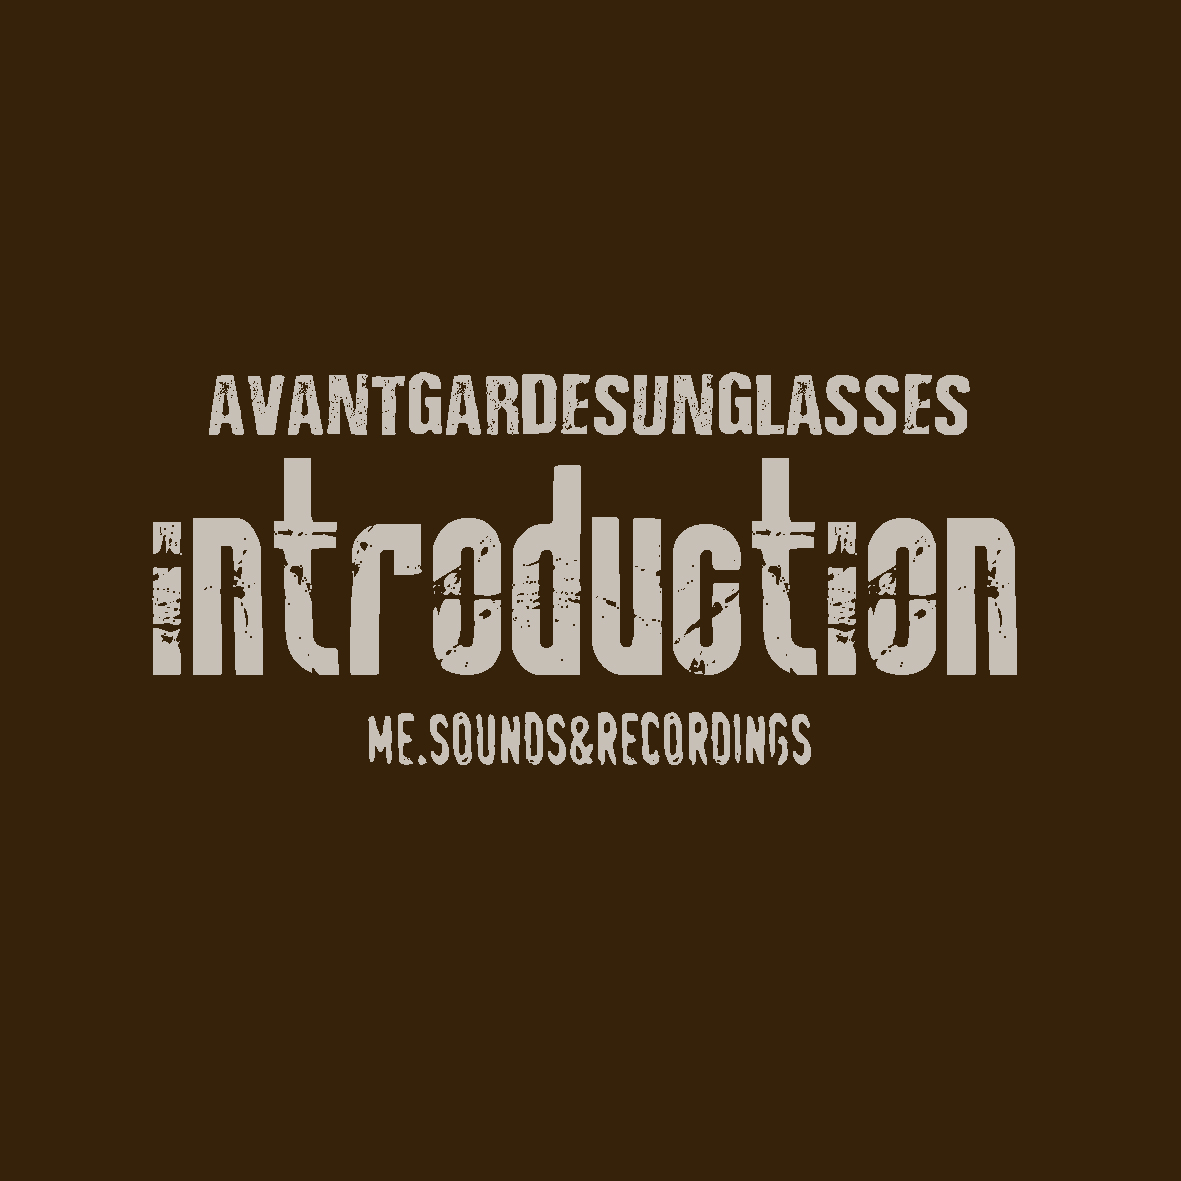 Avantgardesunglasses introduction